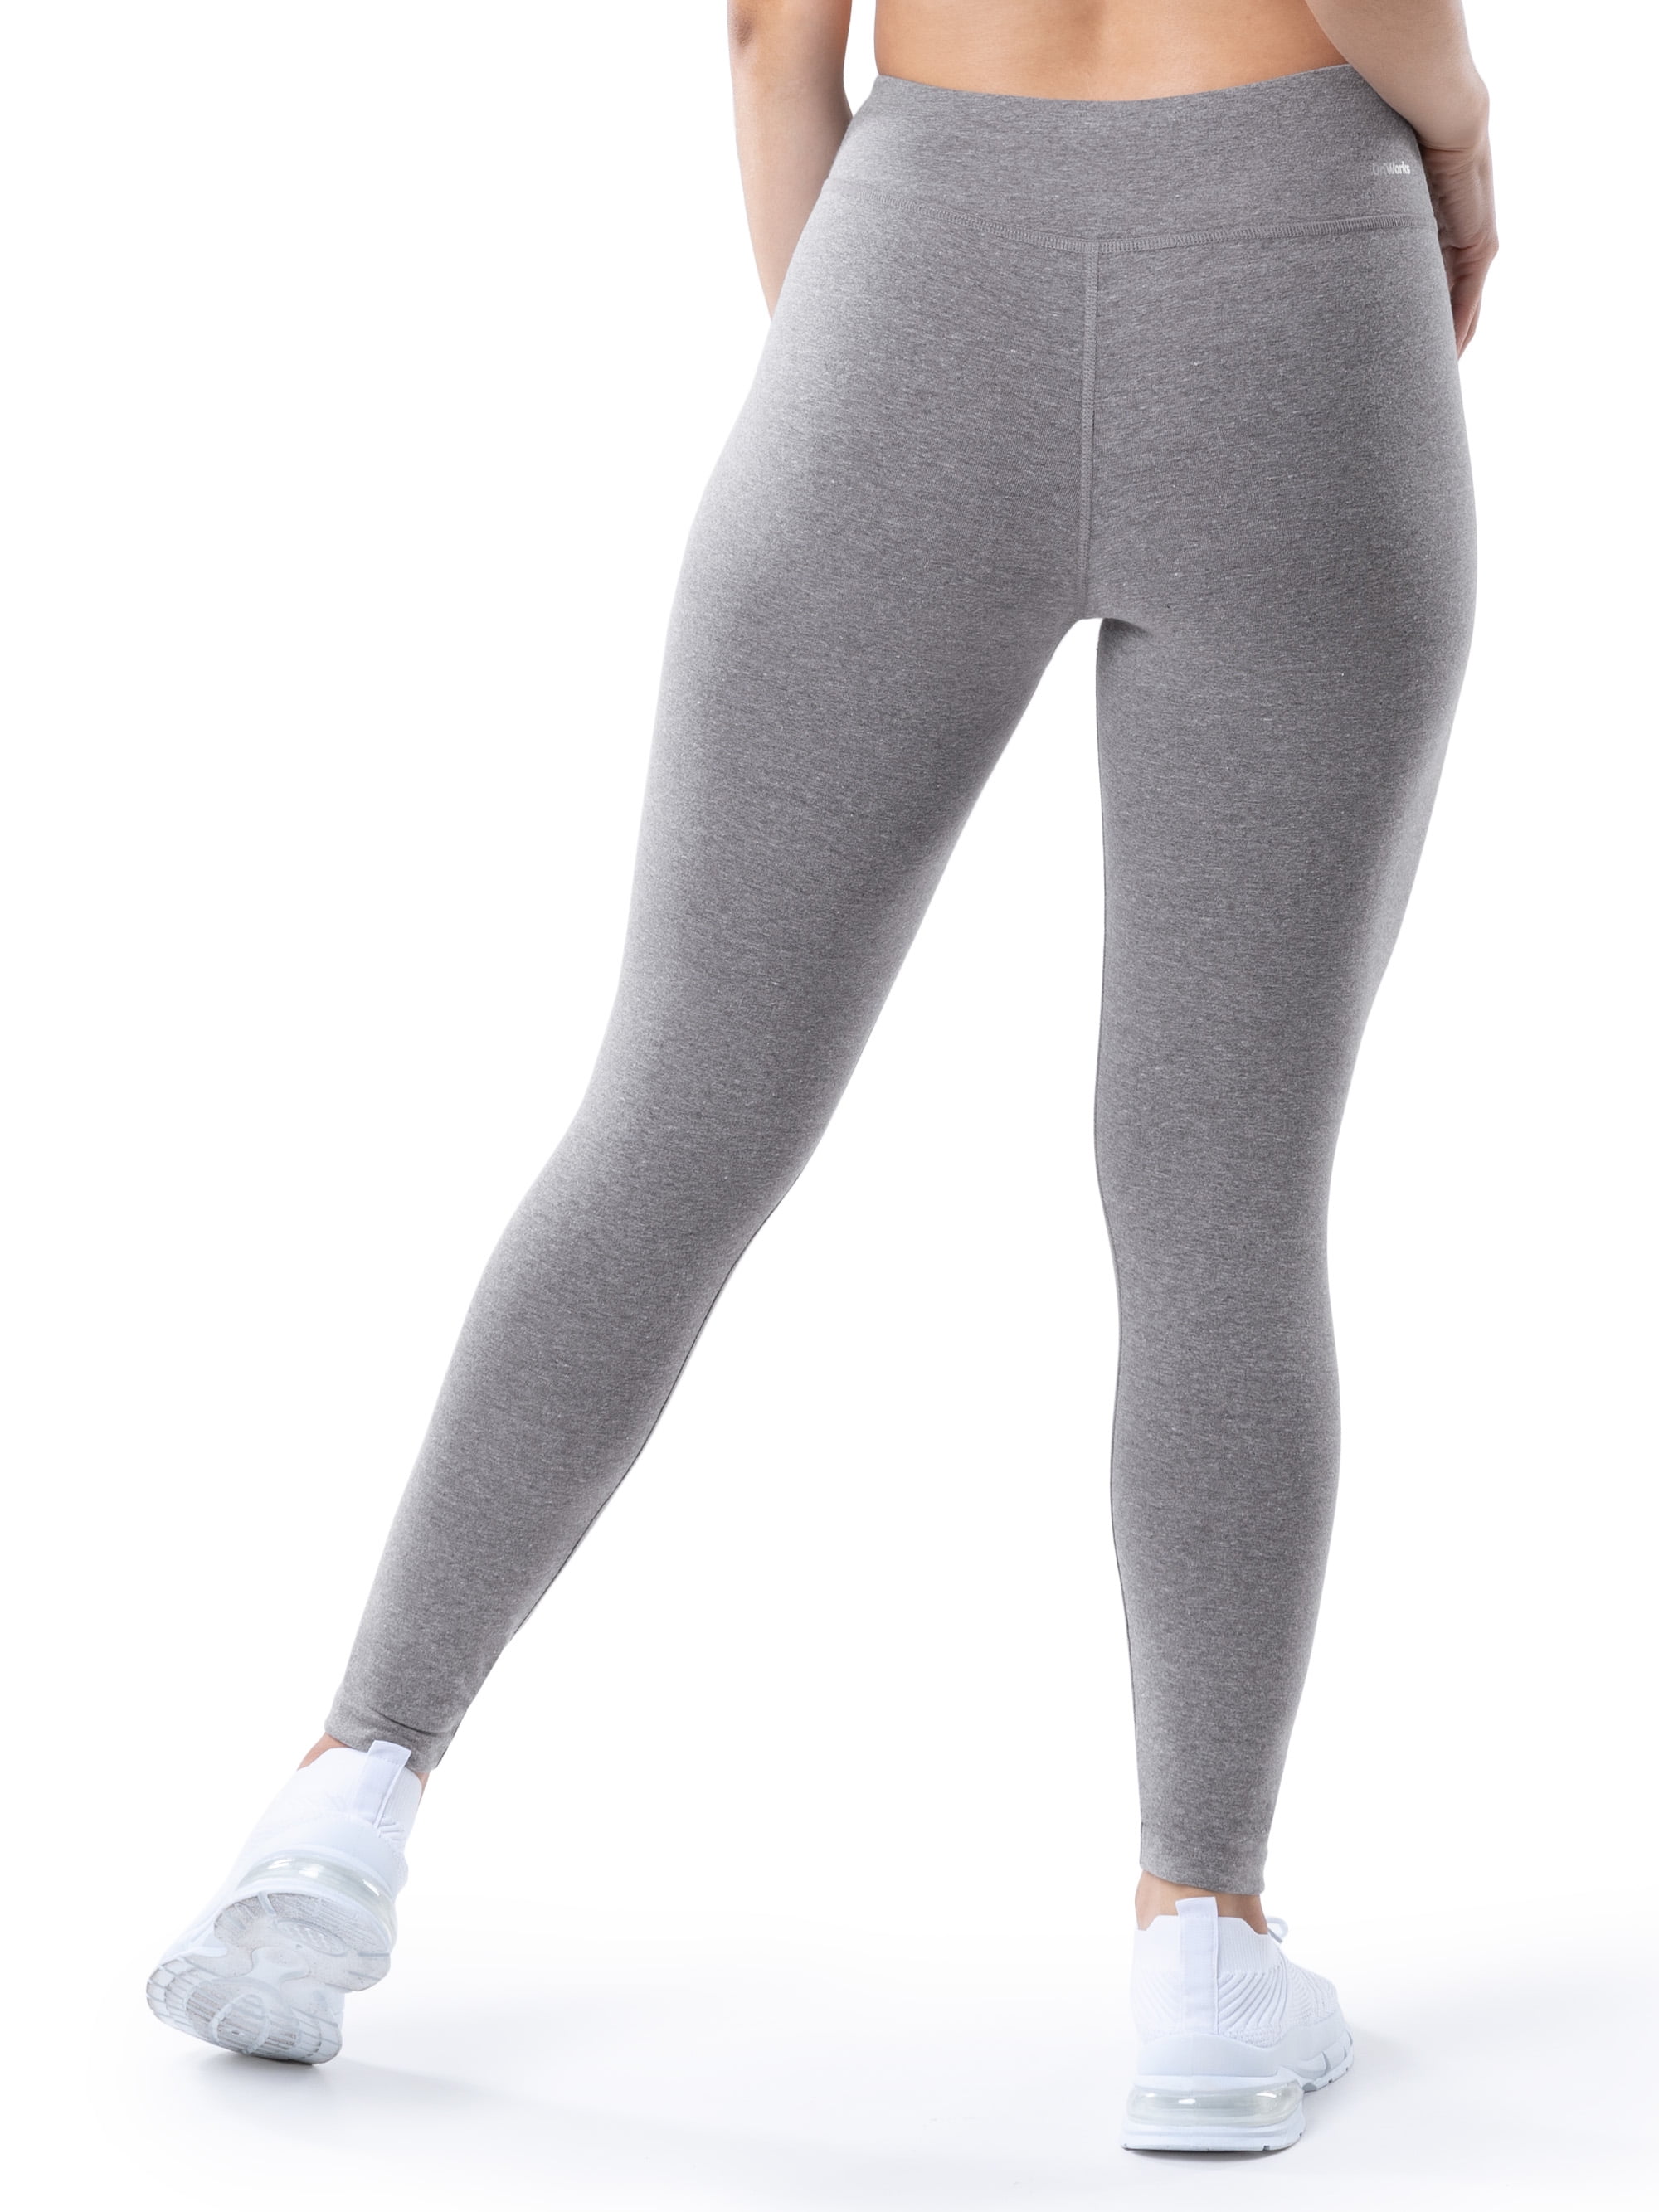 Athletic Works Women's DriWorks Active Sport Tight Gray Leggings Yoga Pants